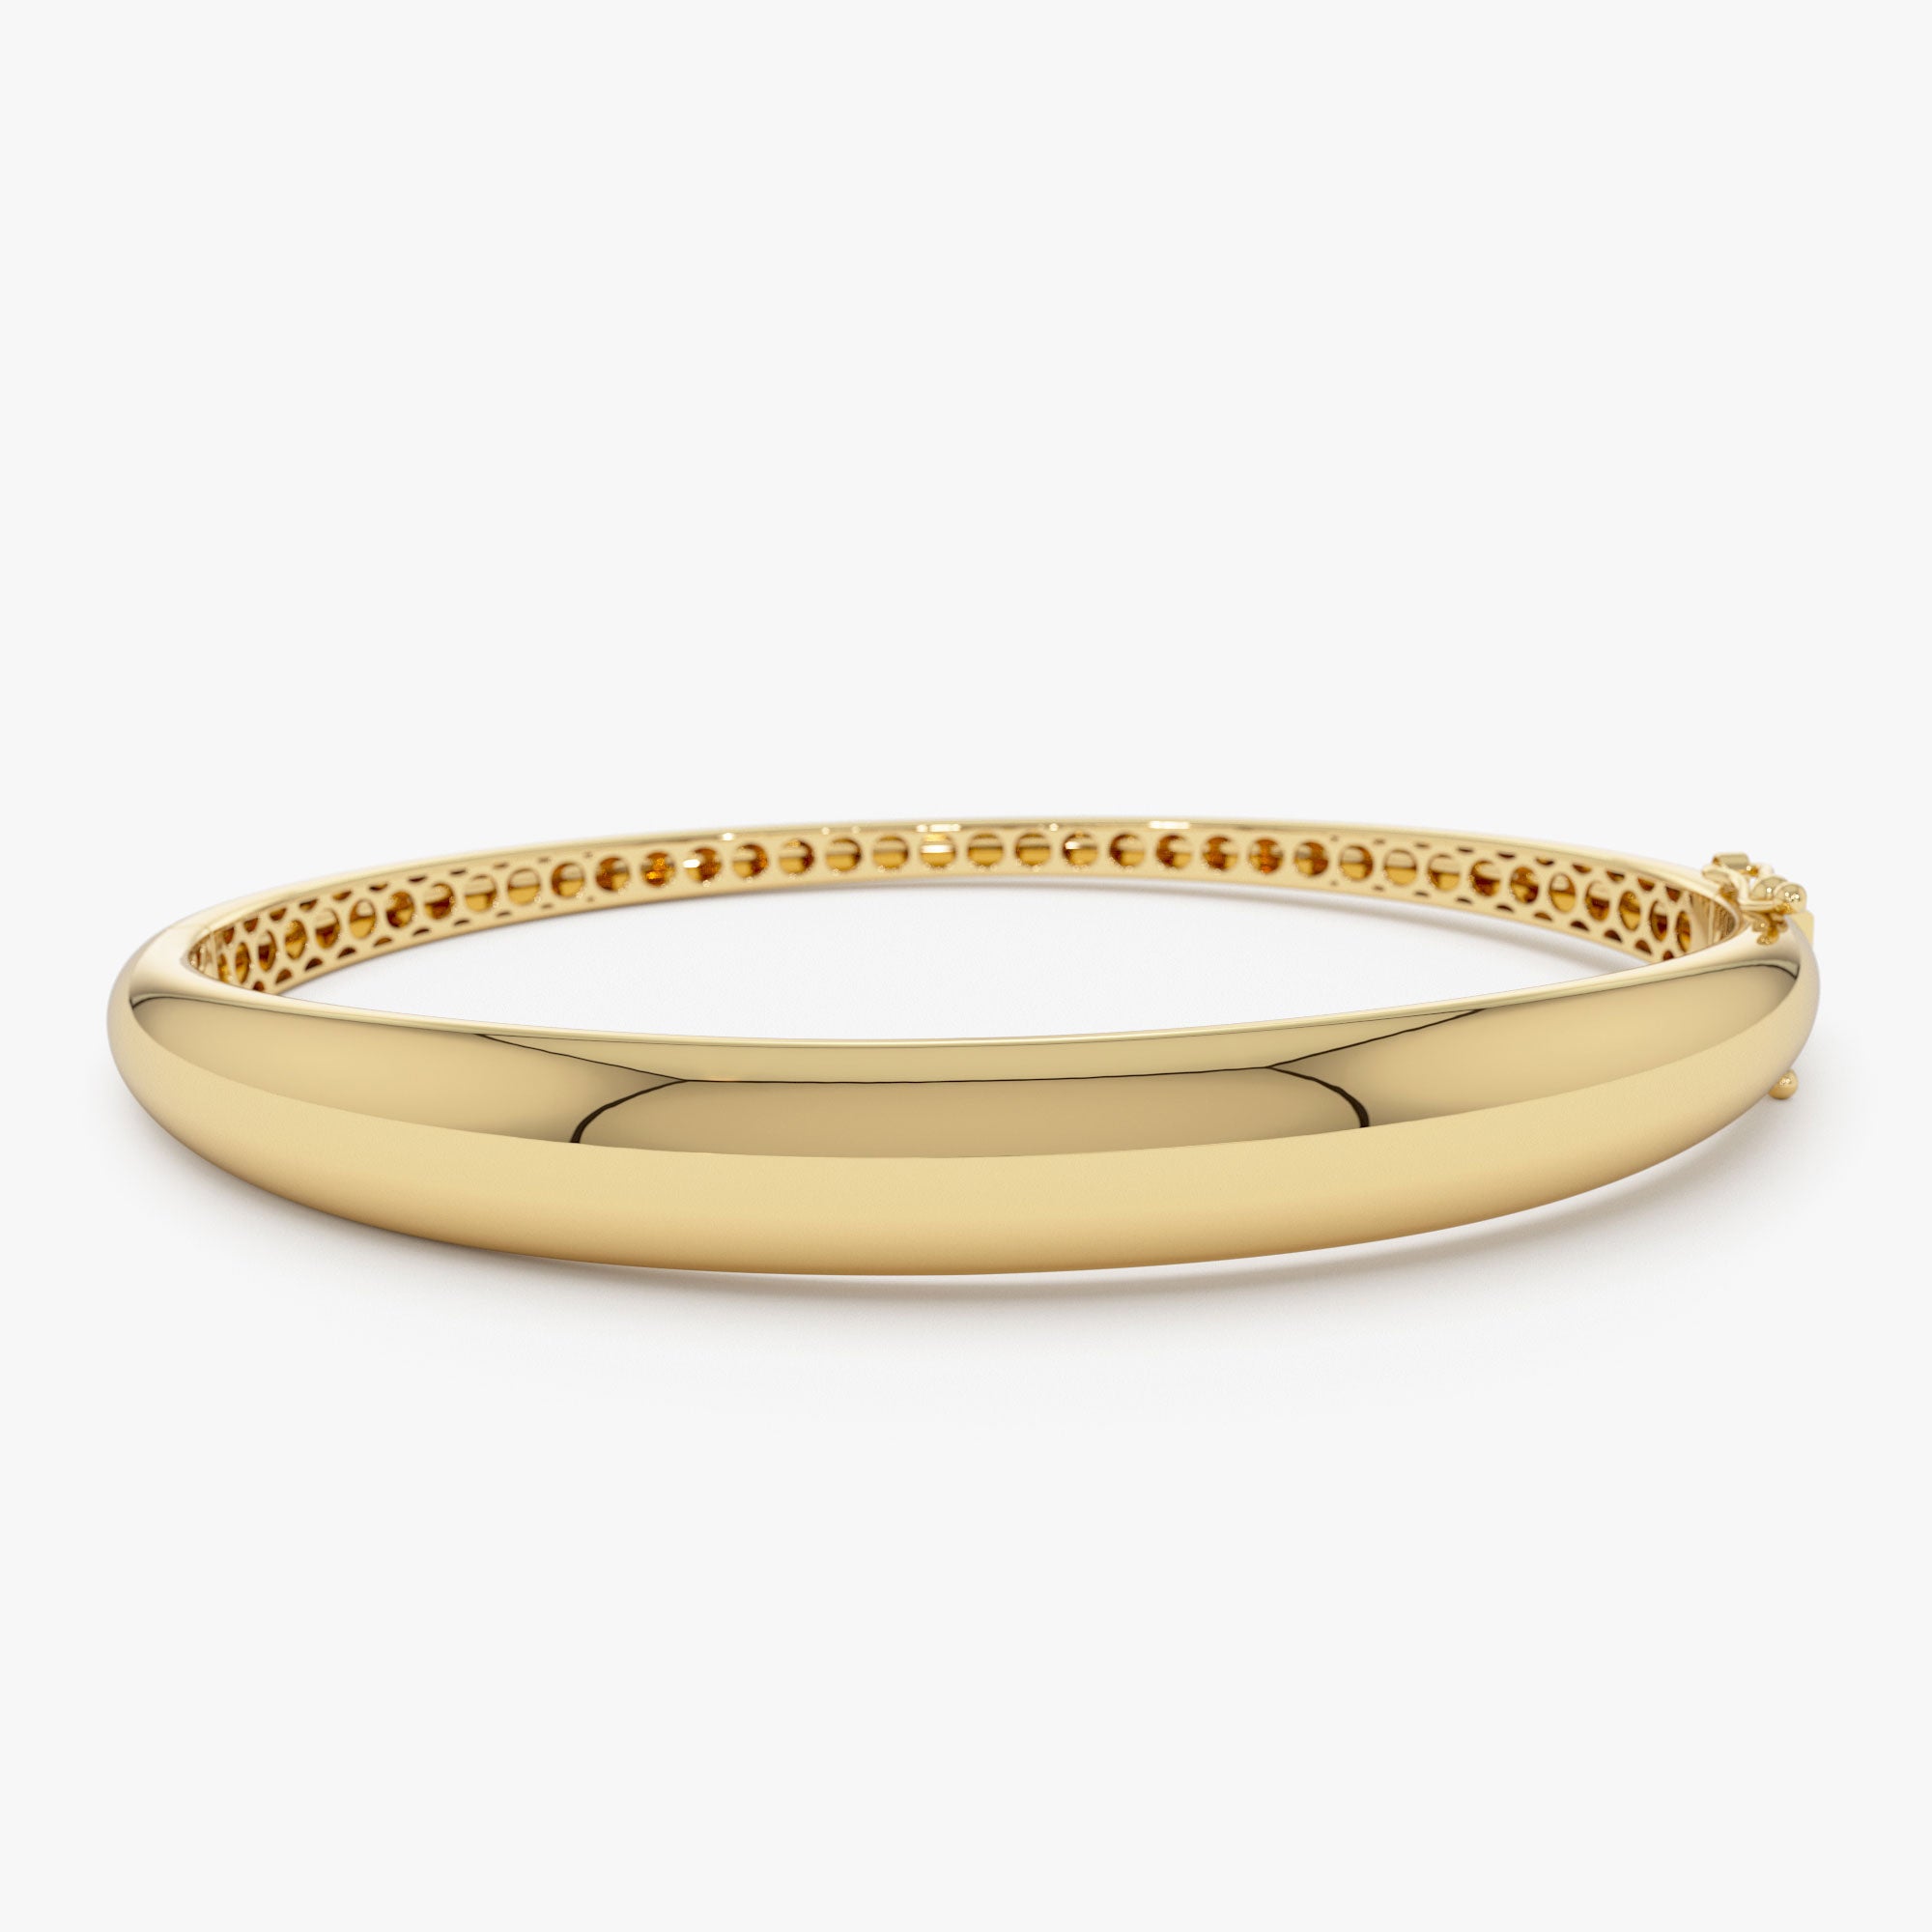 14K 7.5MM Classic Dome Gold Bangle Bracelet 14K Gold Ferkos Fine Jewelry